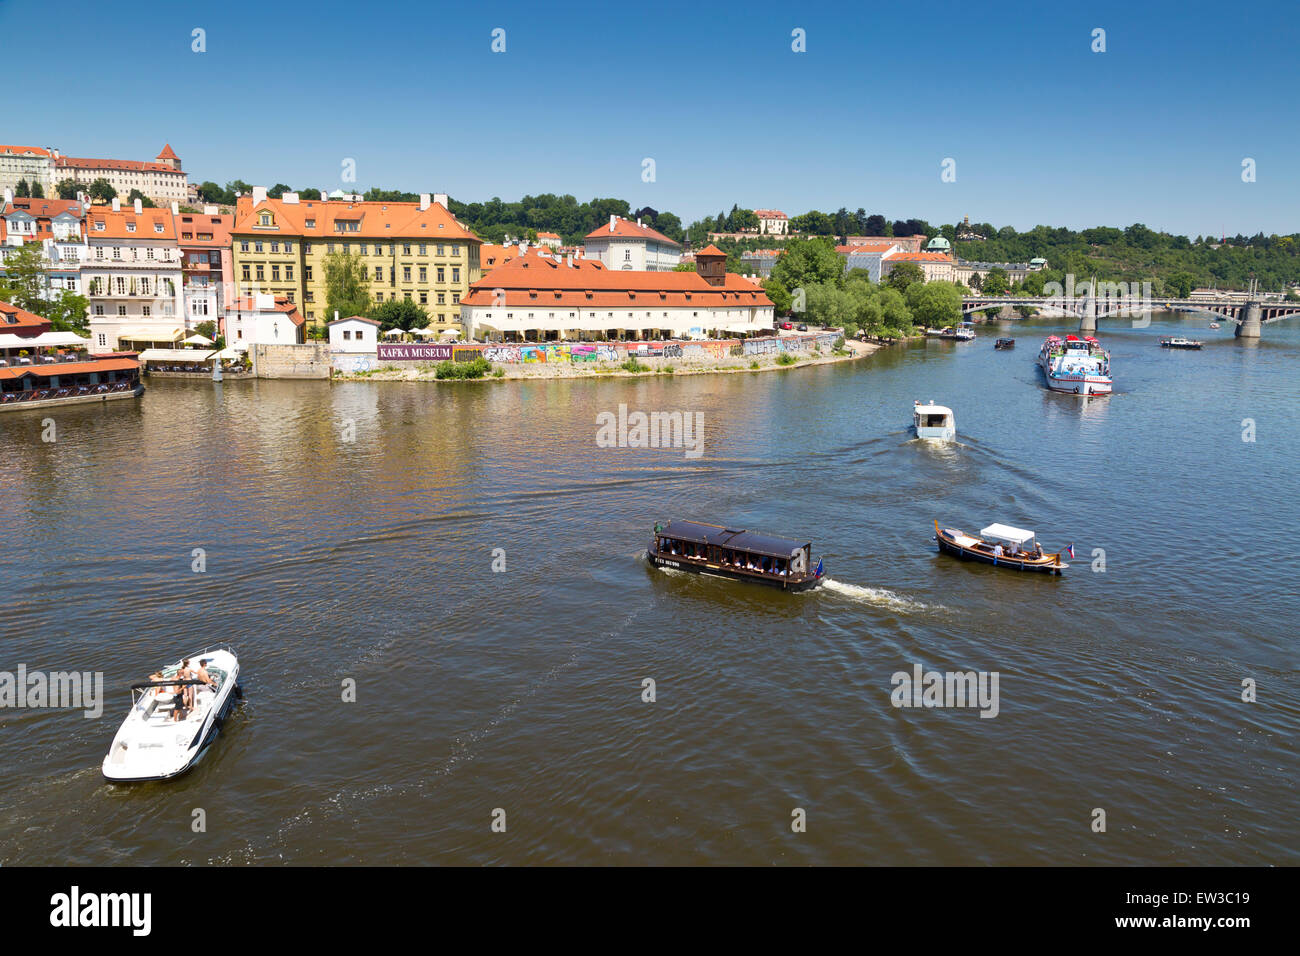 View over the River Moldau in Prague, Czechia Stock Photo